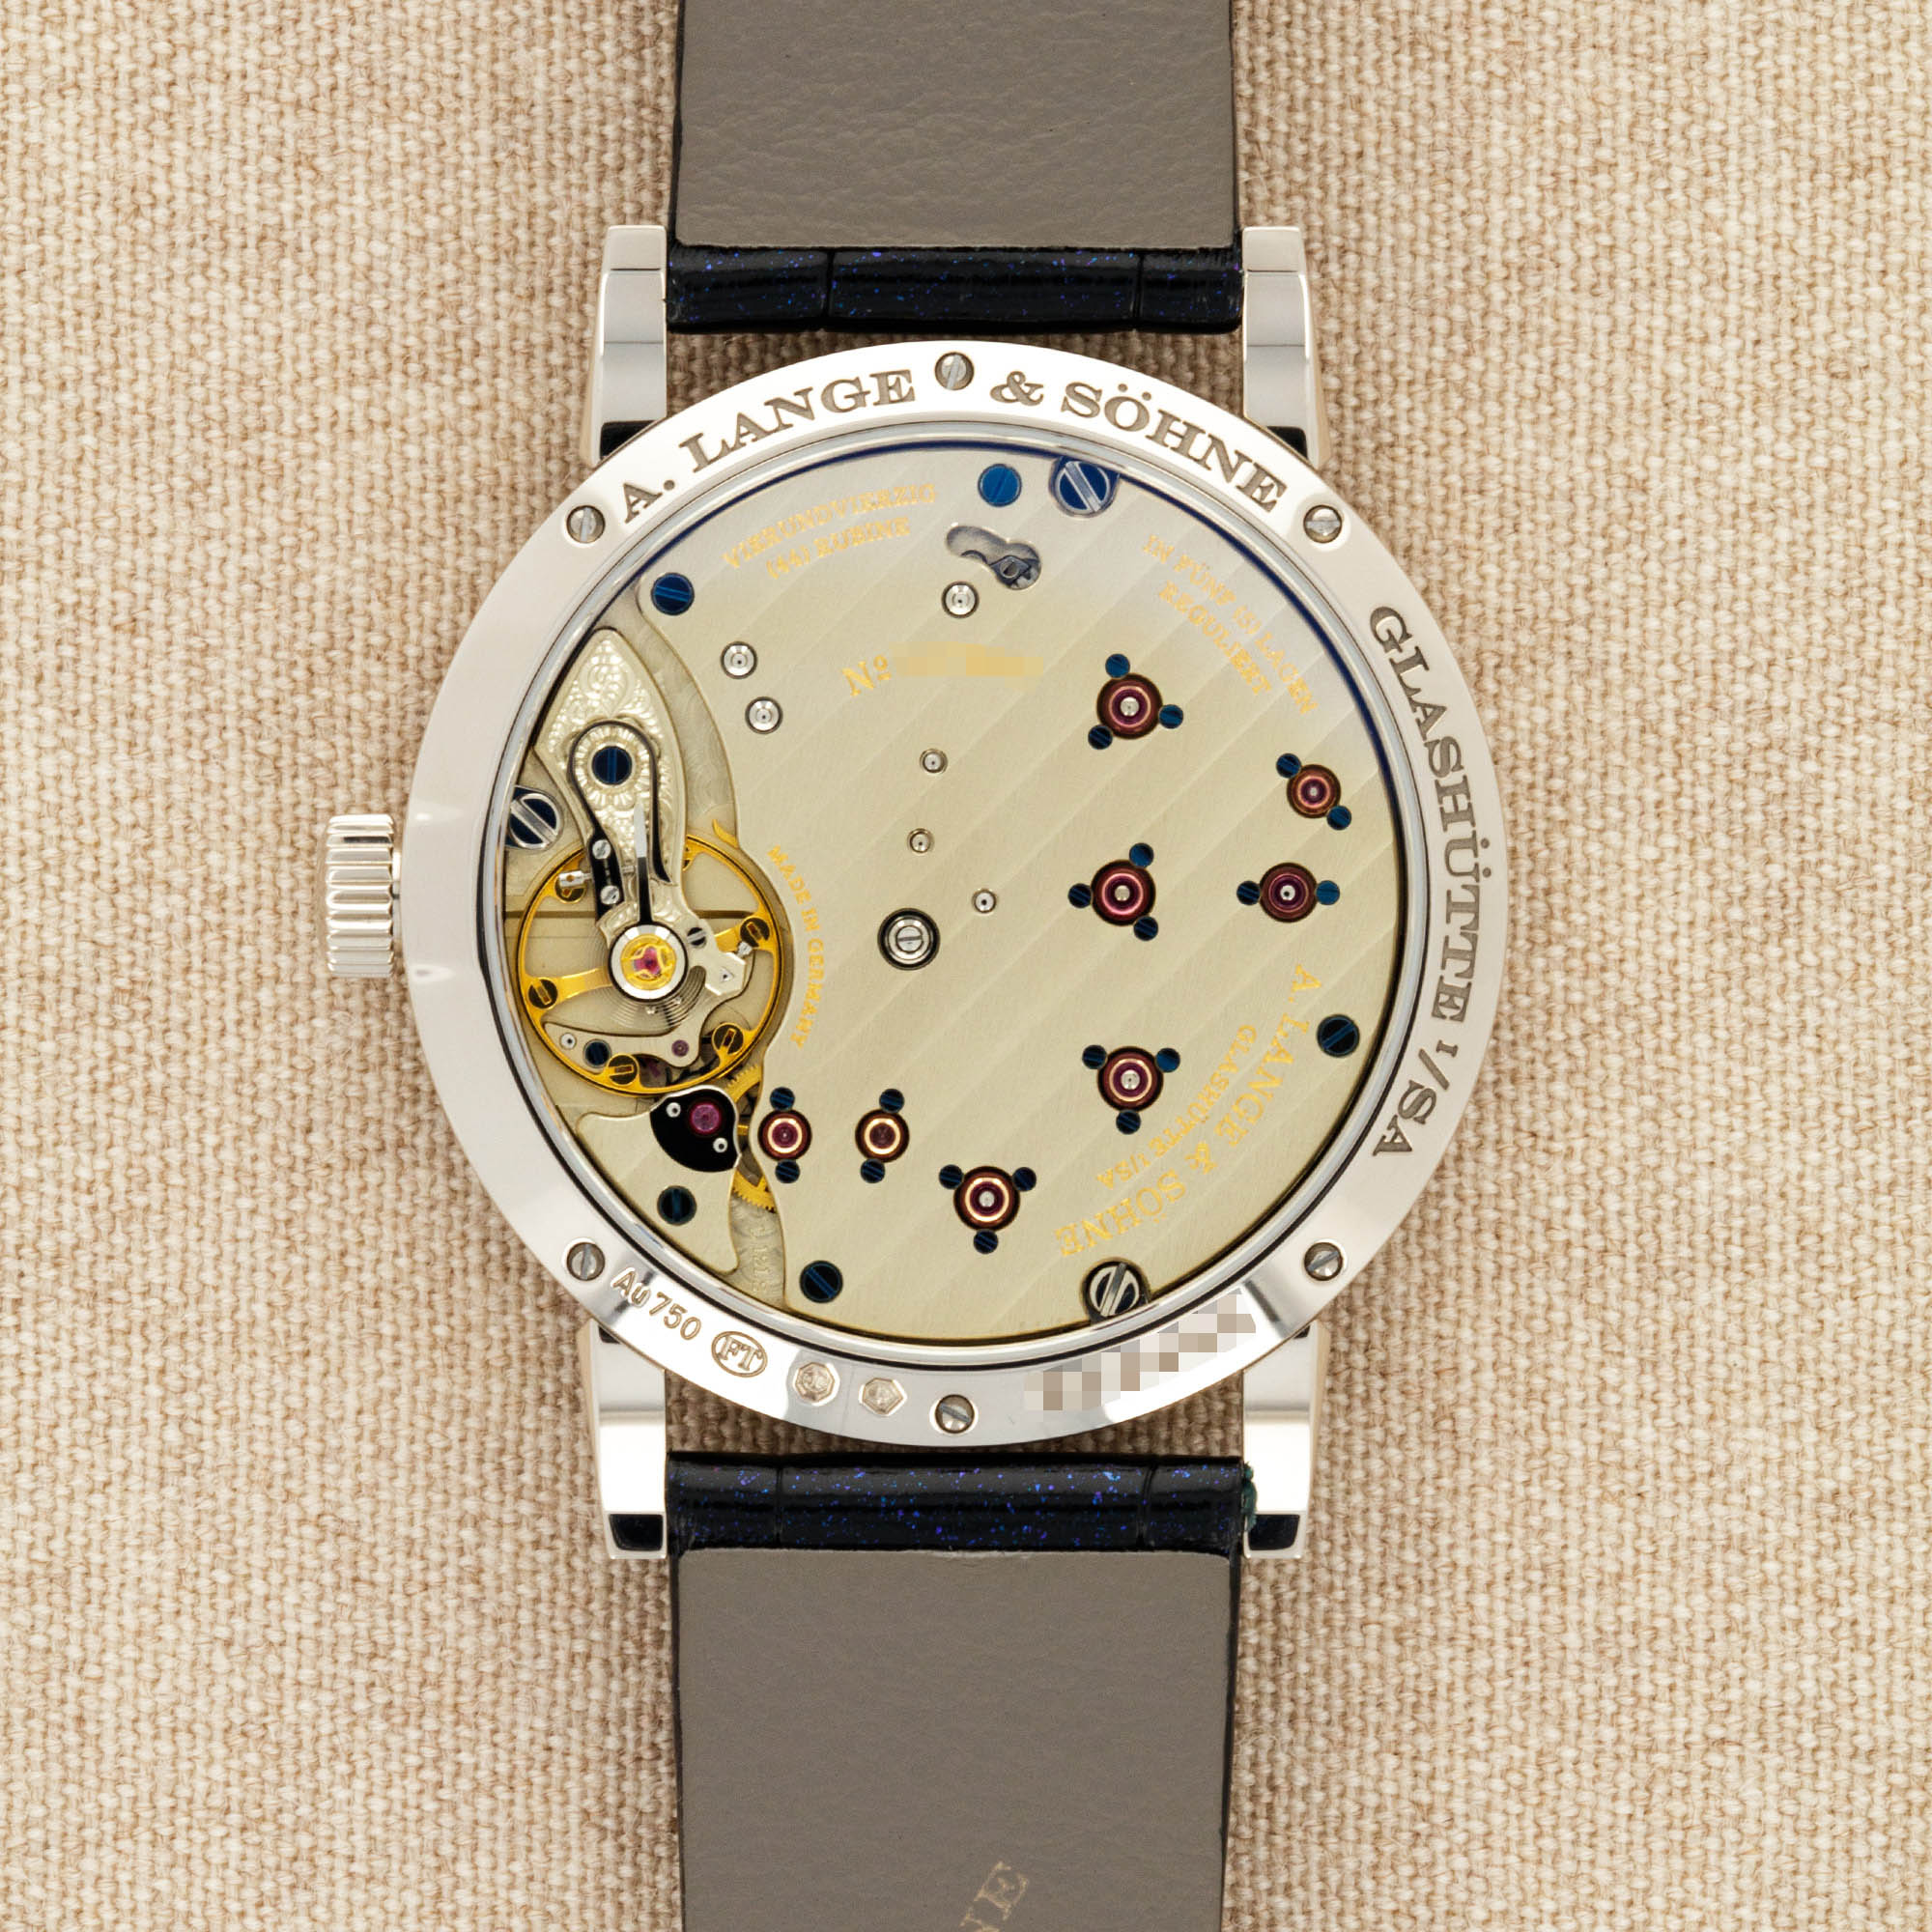 A. Lange & Sohne - A. Lange & Sohne Lange 1 Moonphase Ref. 182.086 - The Keystone Watches